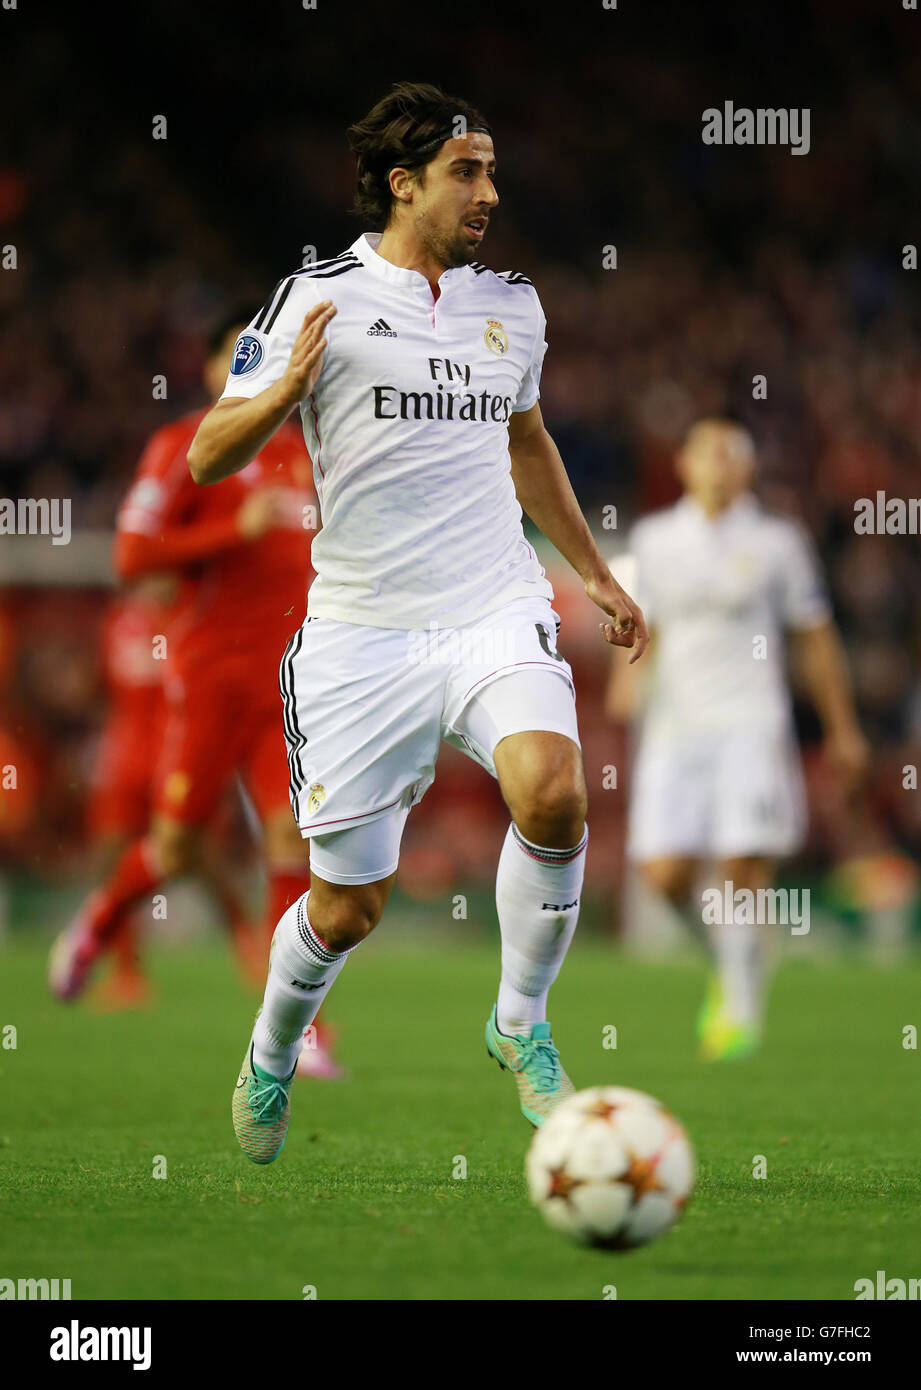 Le Sami Khedira du Real Madrid lors du match de la Ligue des champions de l'UEFA à Anfield, Liverpool. Banque D'Images